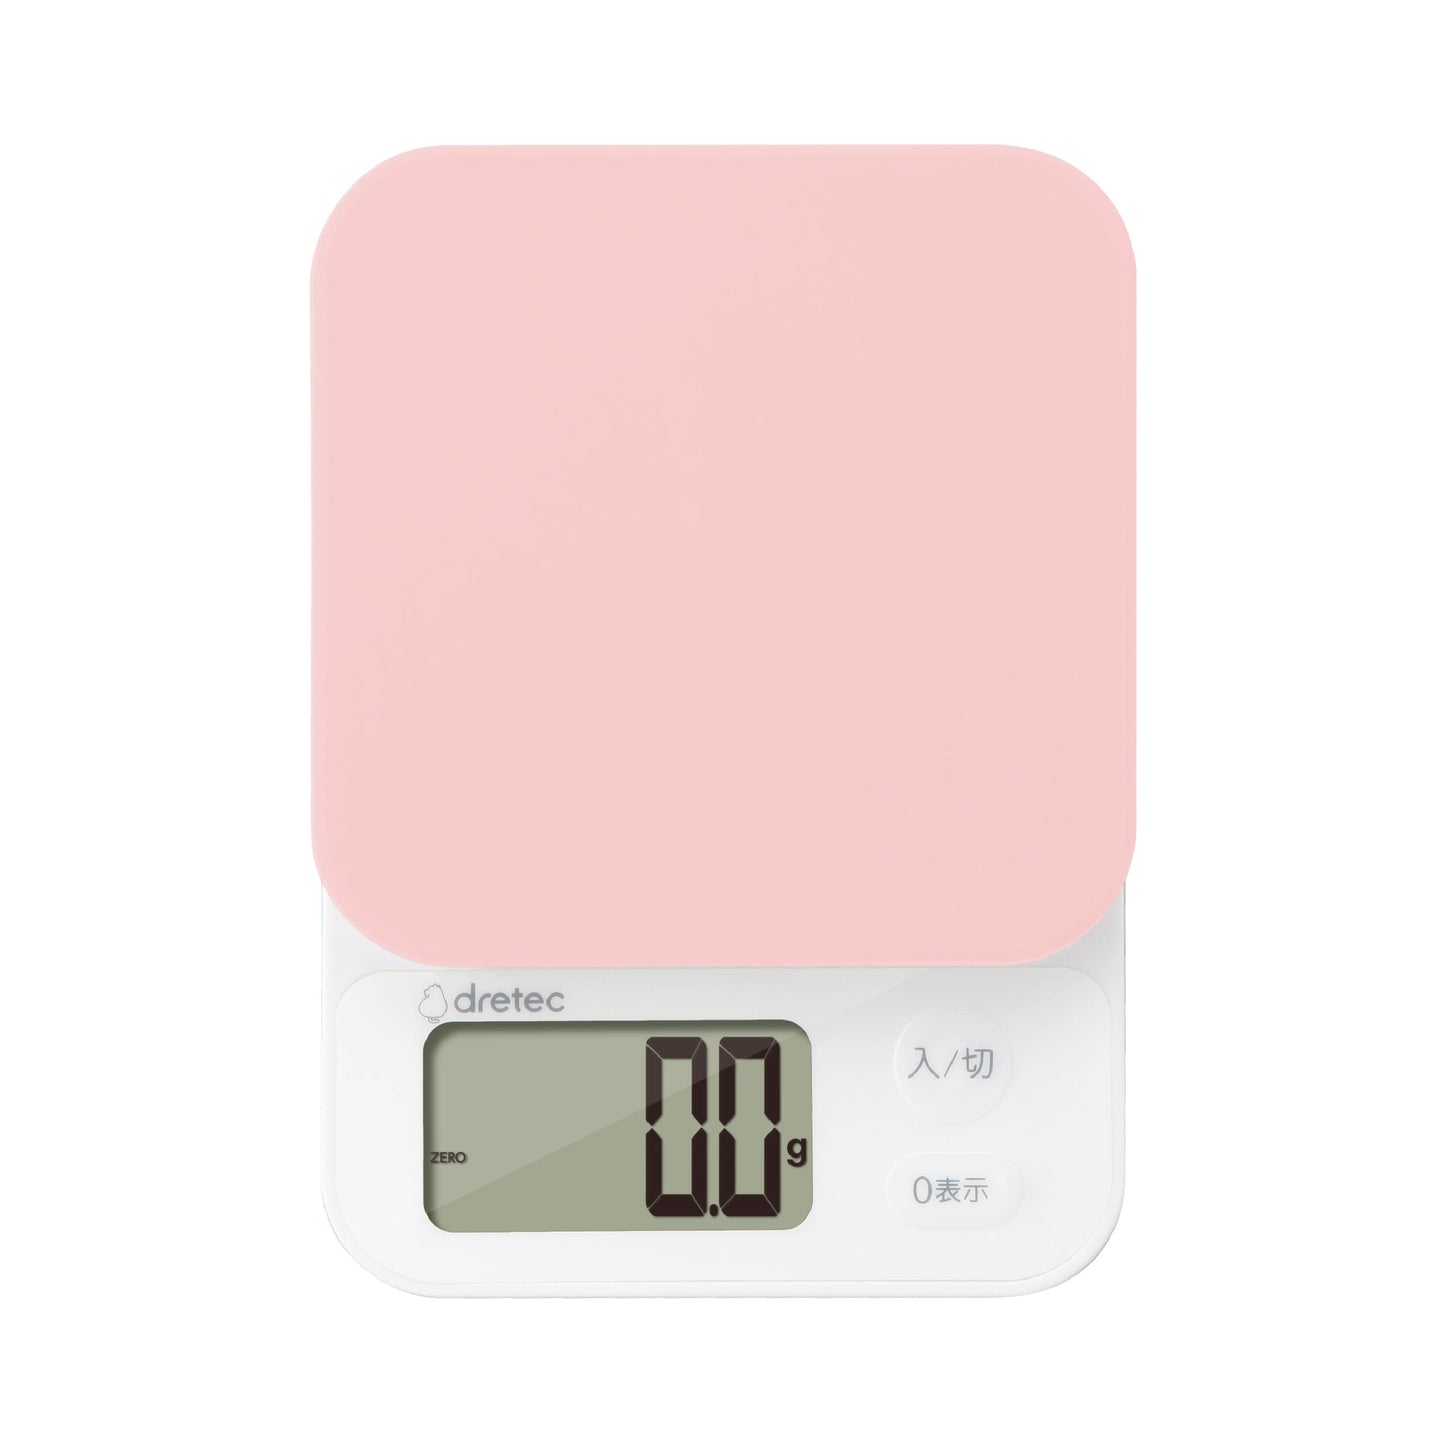 Precision Digital Scale (0.1g-2kg) in Pink